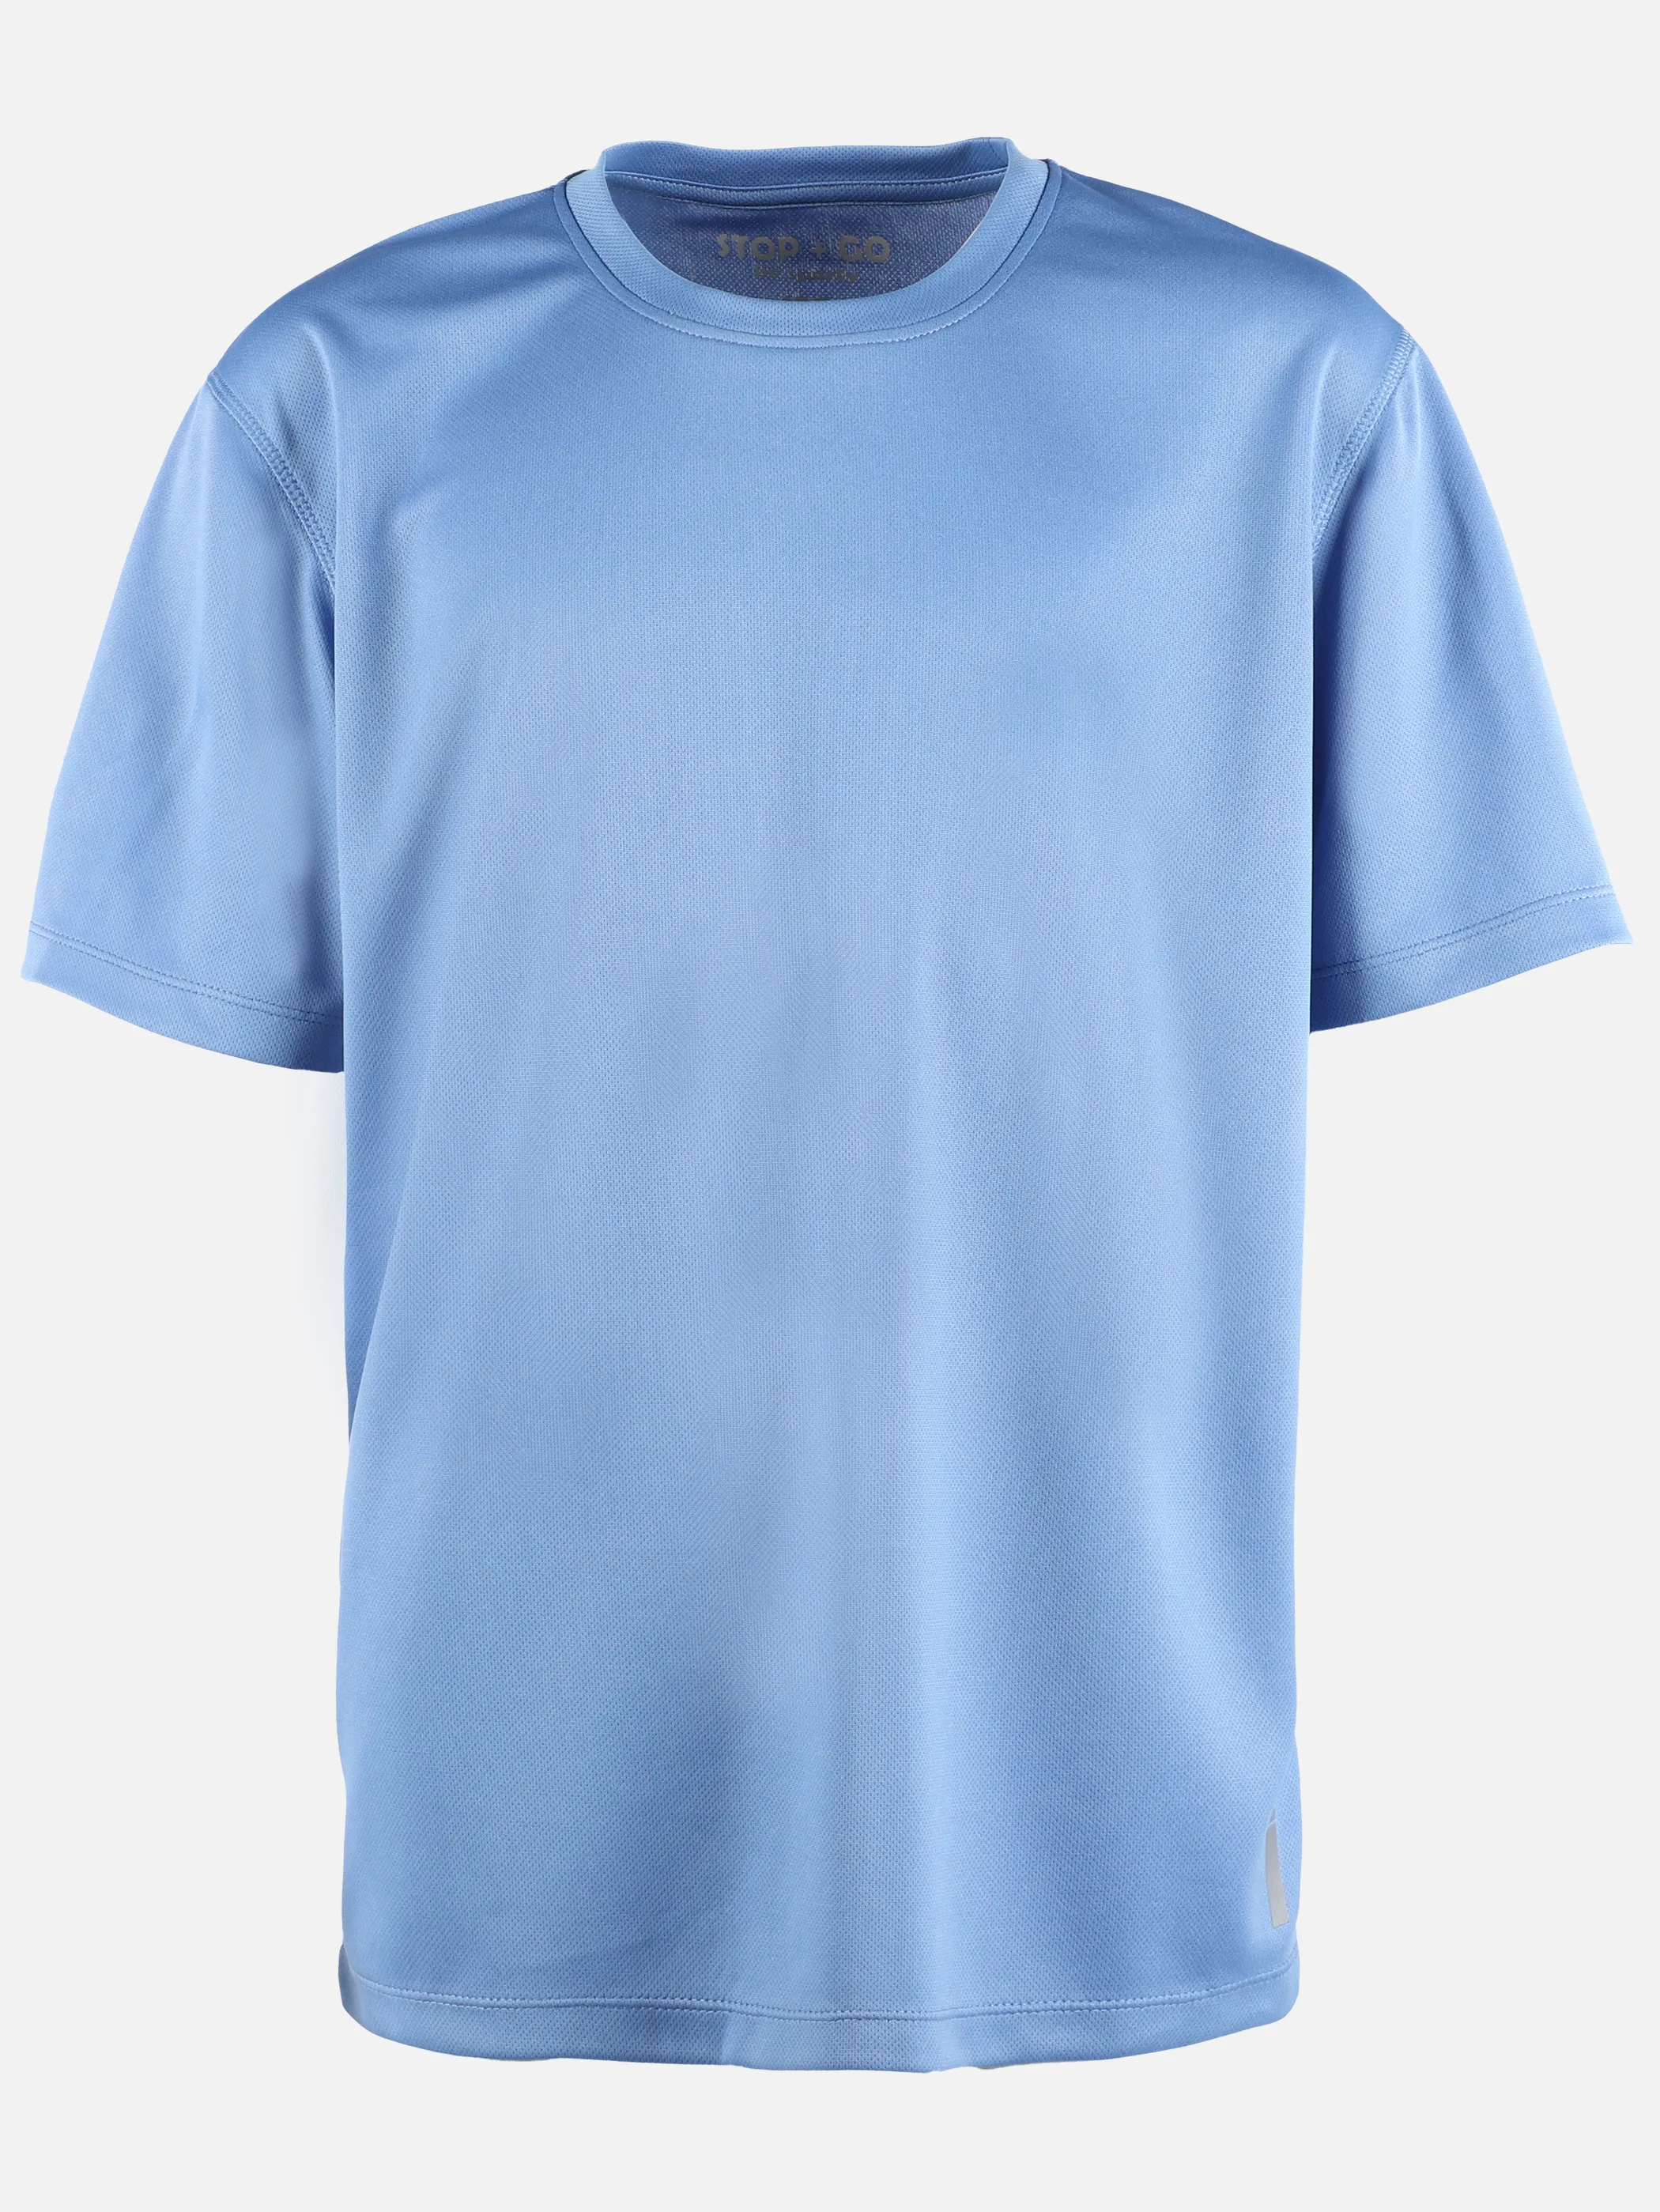 Stop + Go TB- Sport T-Shirt Blau 890102 BLUE 1